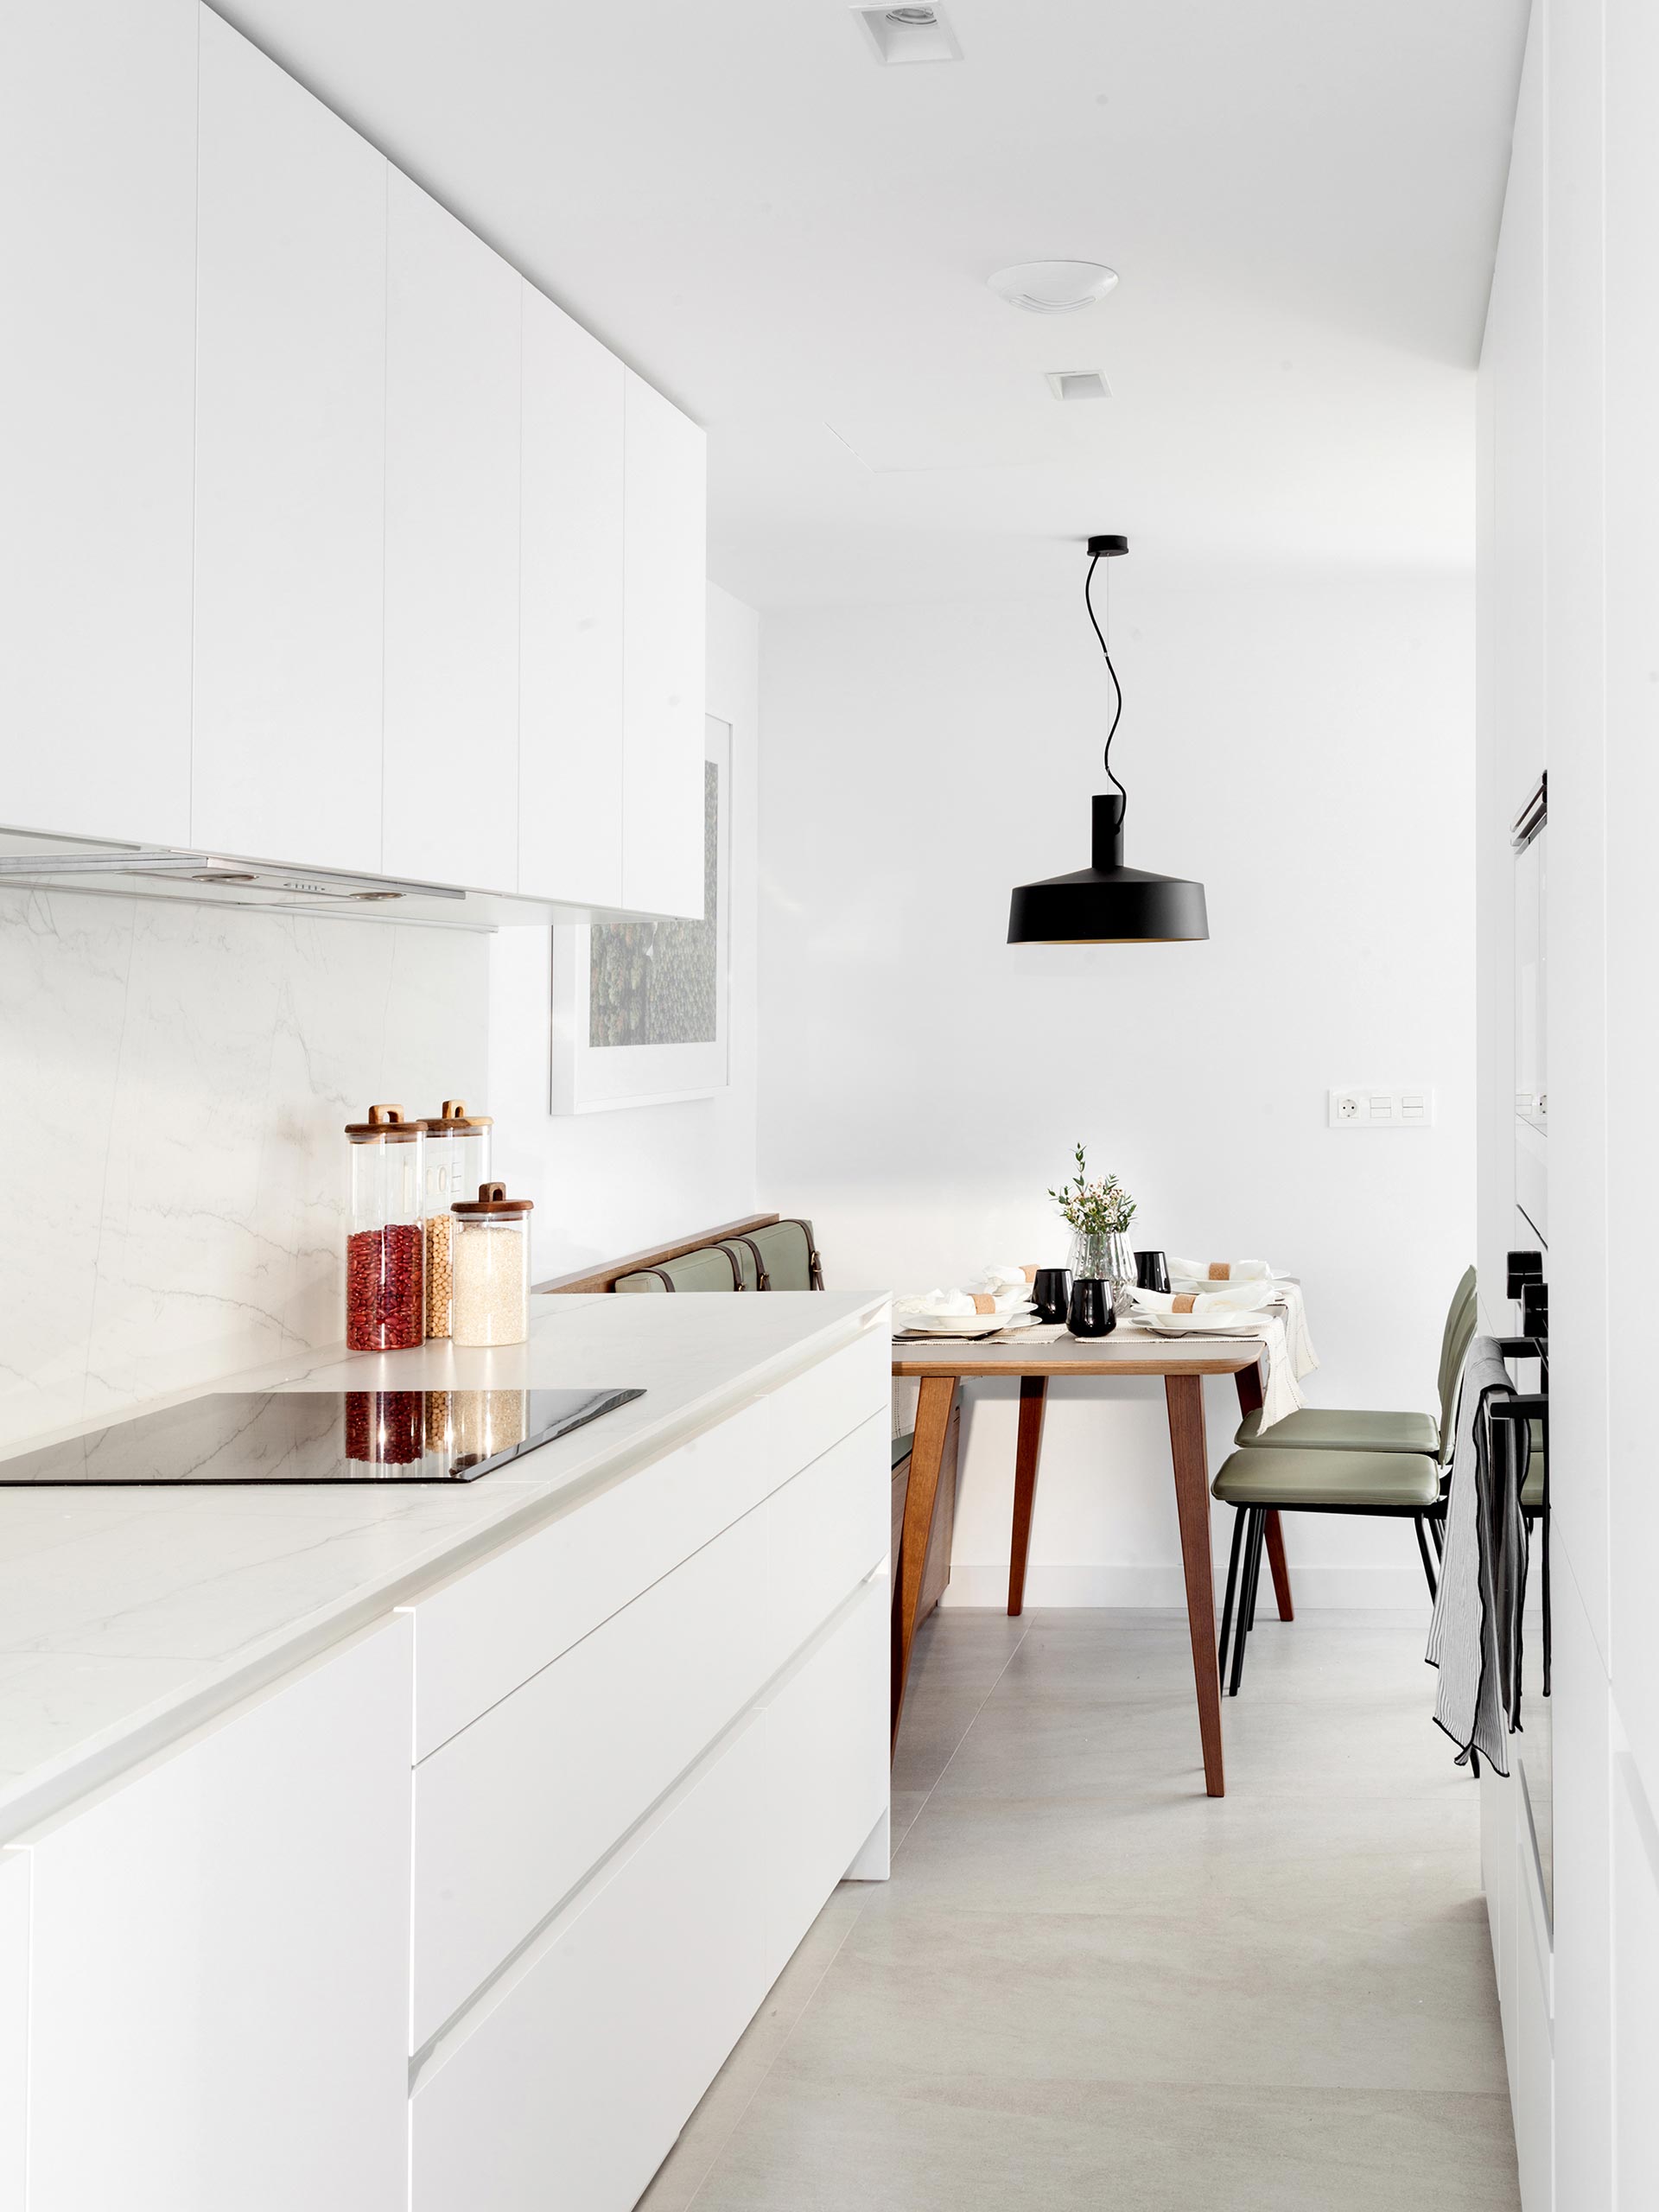 Santos kitchens in small rooms, by the designer Natalia Zubizarreta